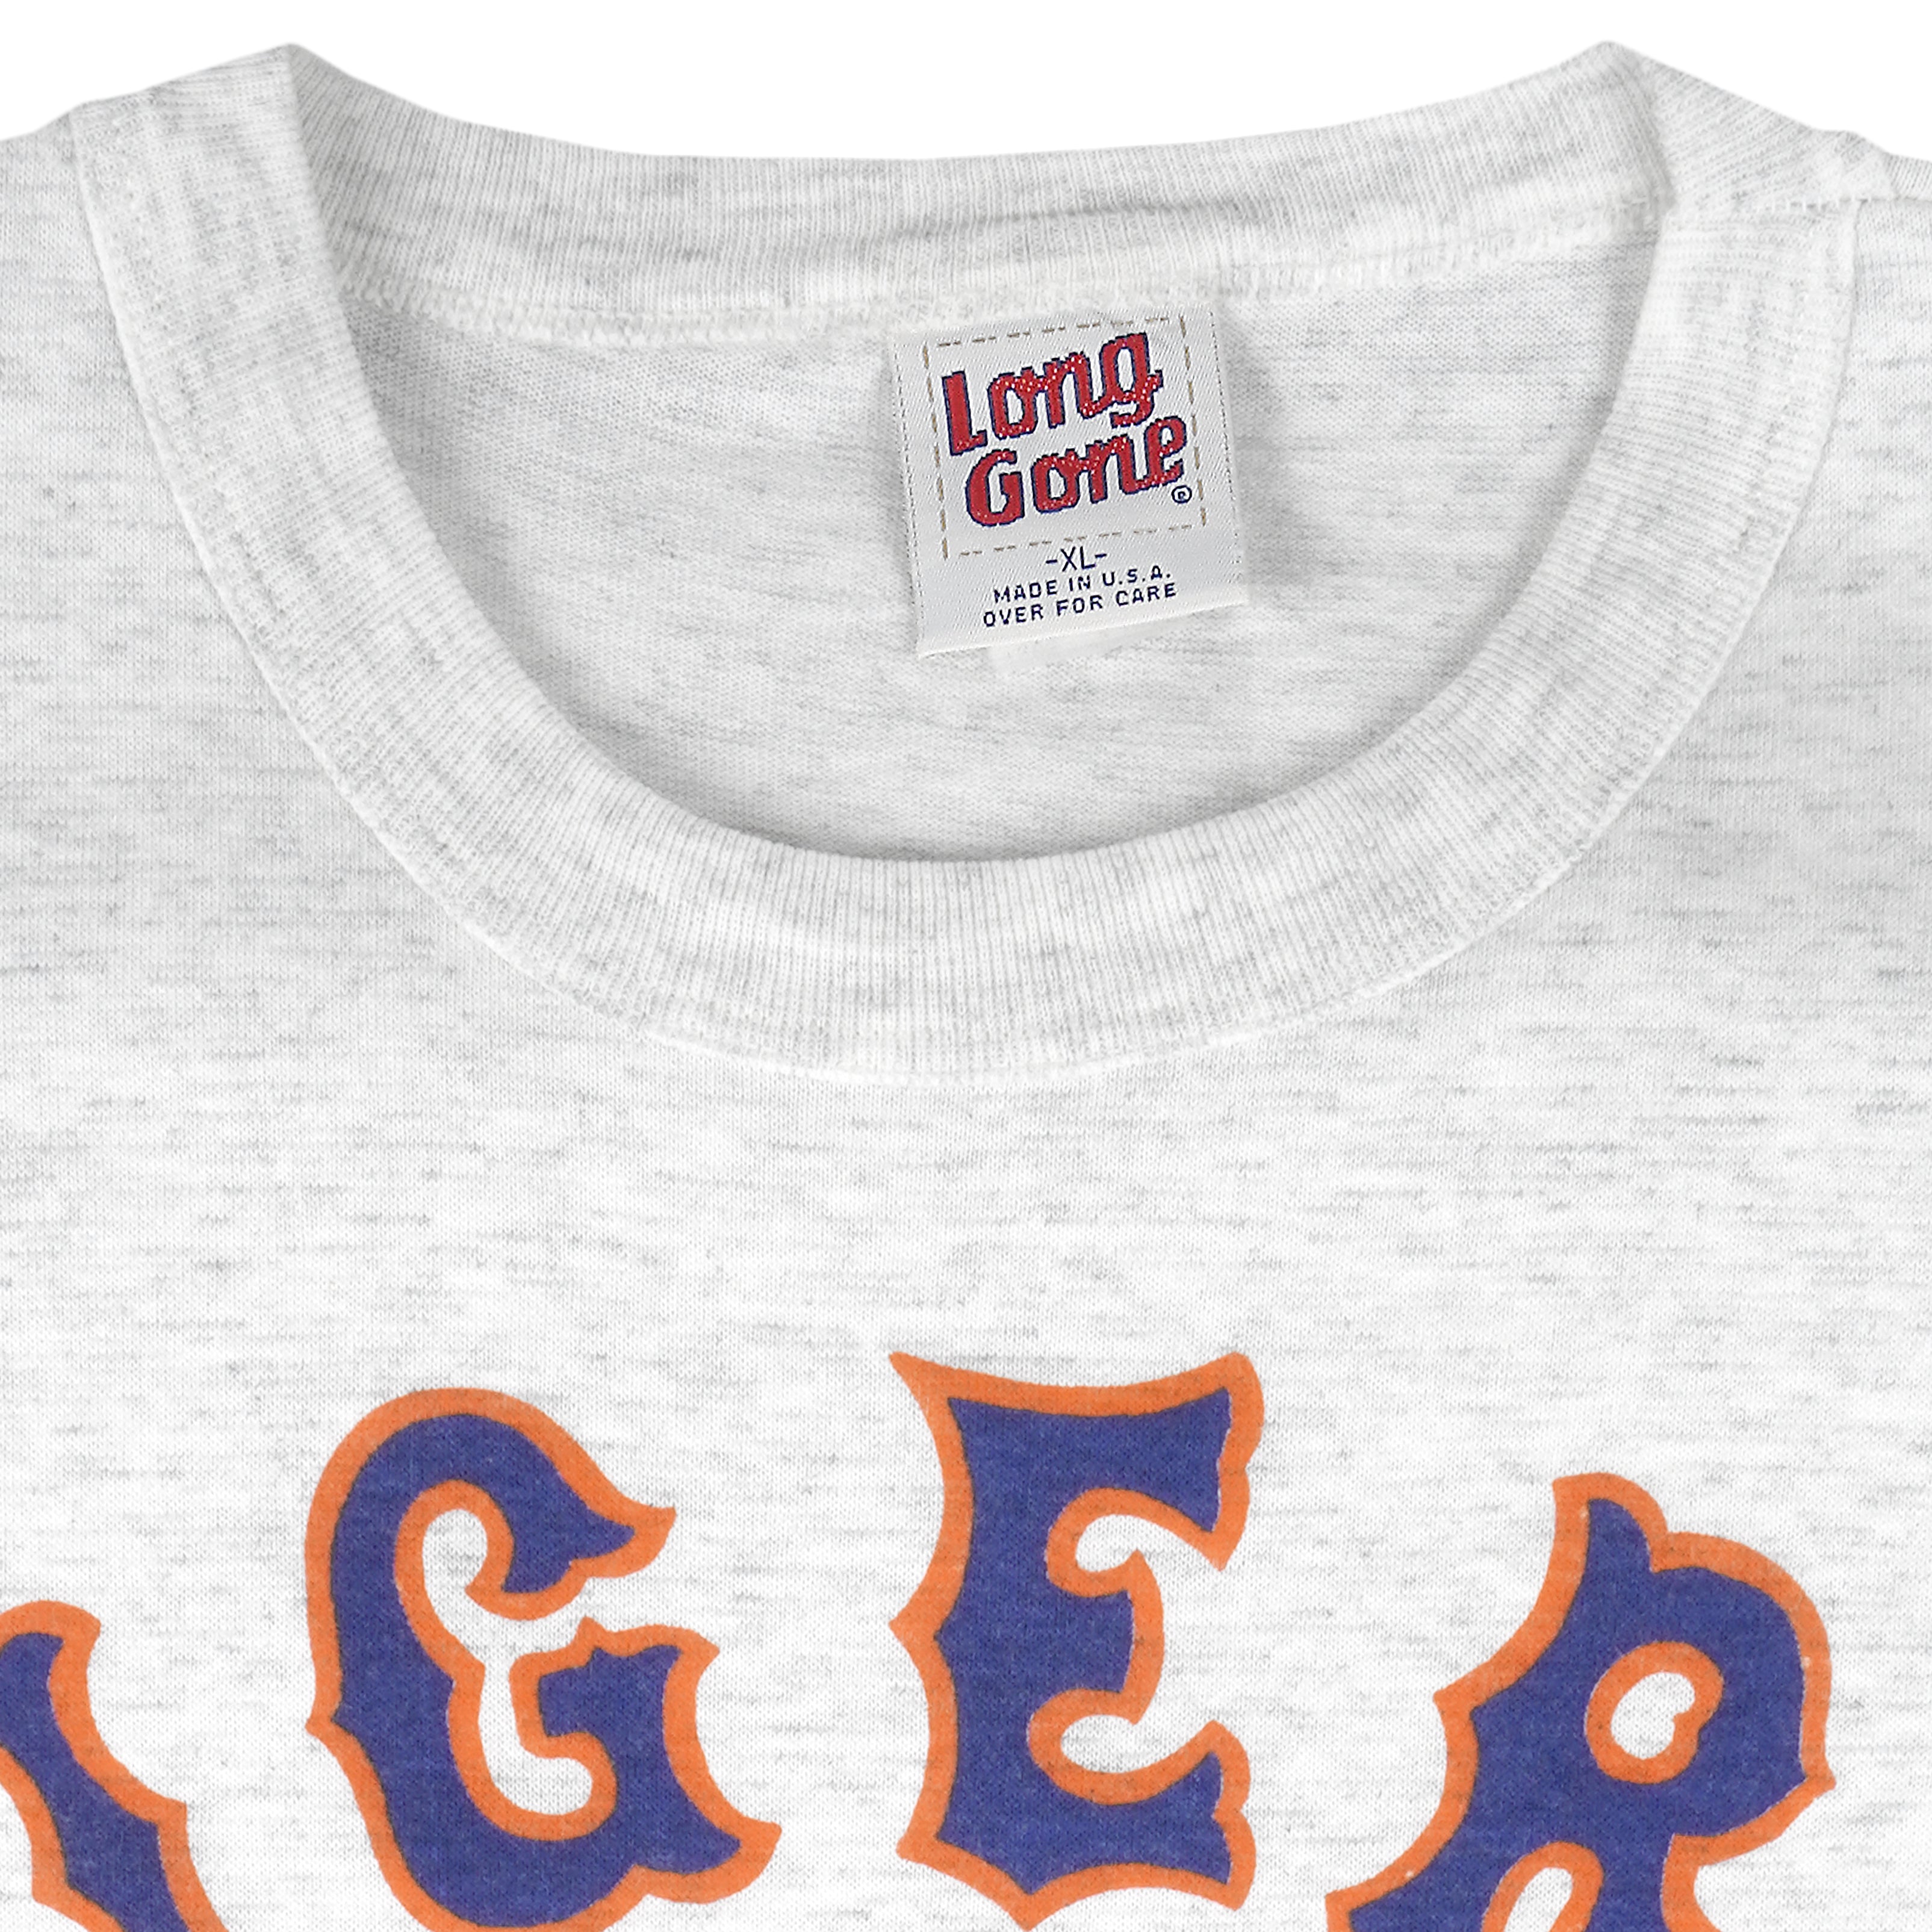 Vintage Detroit Tigers Tee Shirt Blue Lee Baseball 90's 